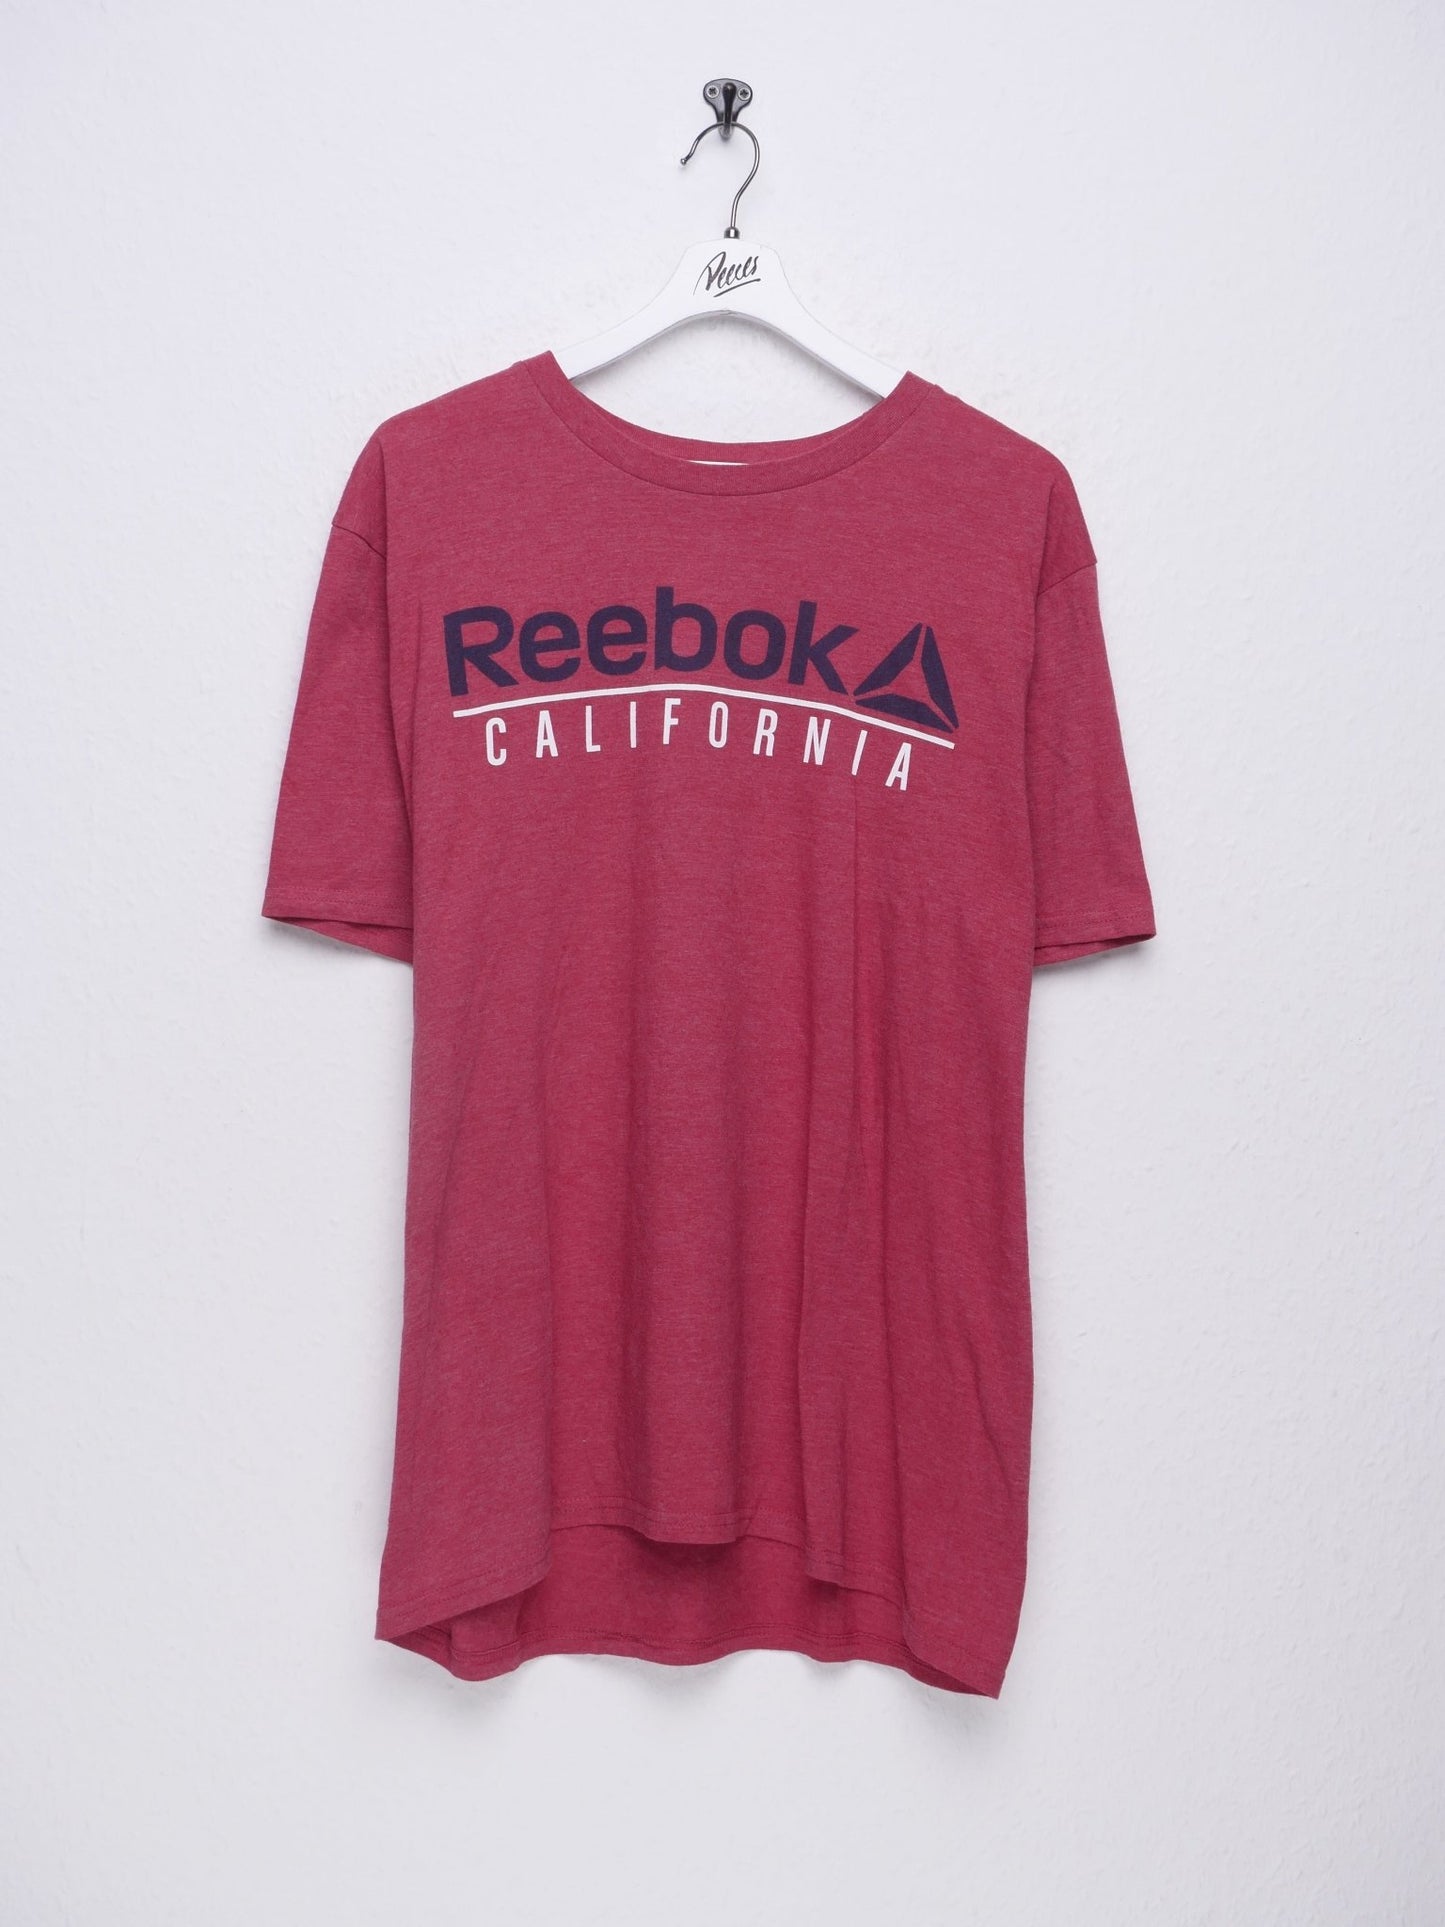 Reebok printed Spellout Vintage Shirt - Peeces